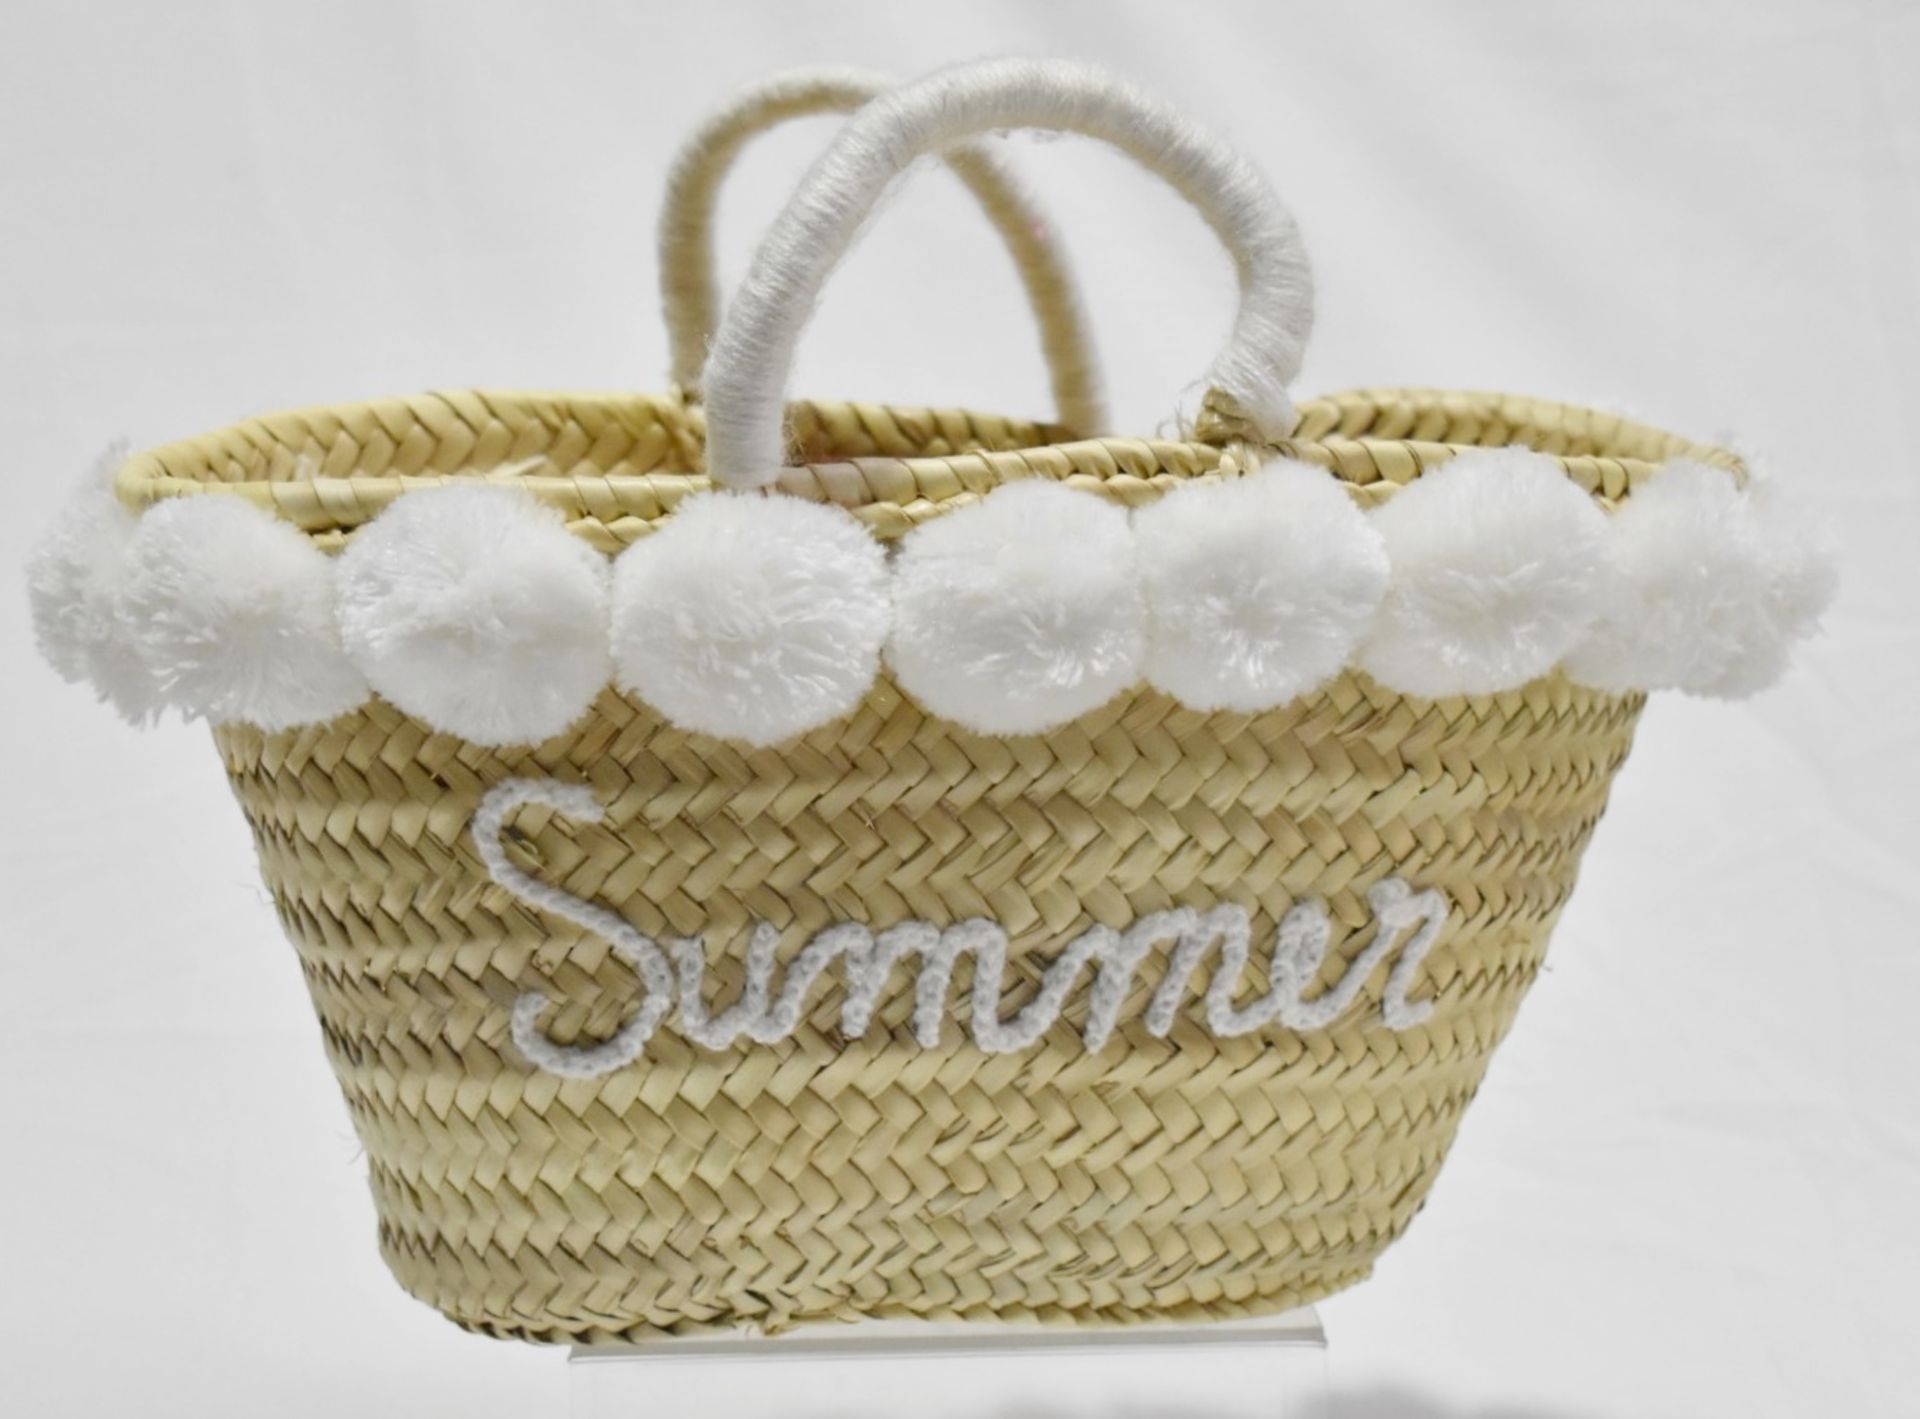 1 x BONITA Large Straw Summer Pom-Pom Basket Bag - Original Price £89.95